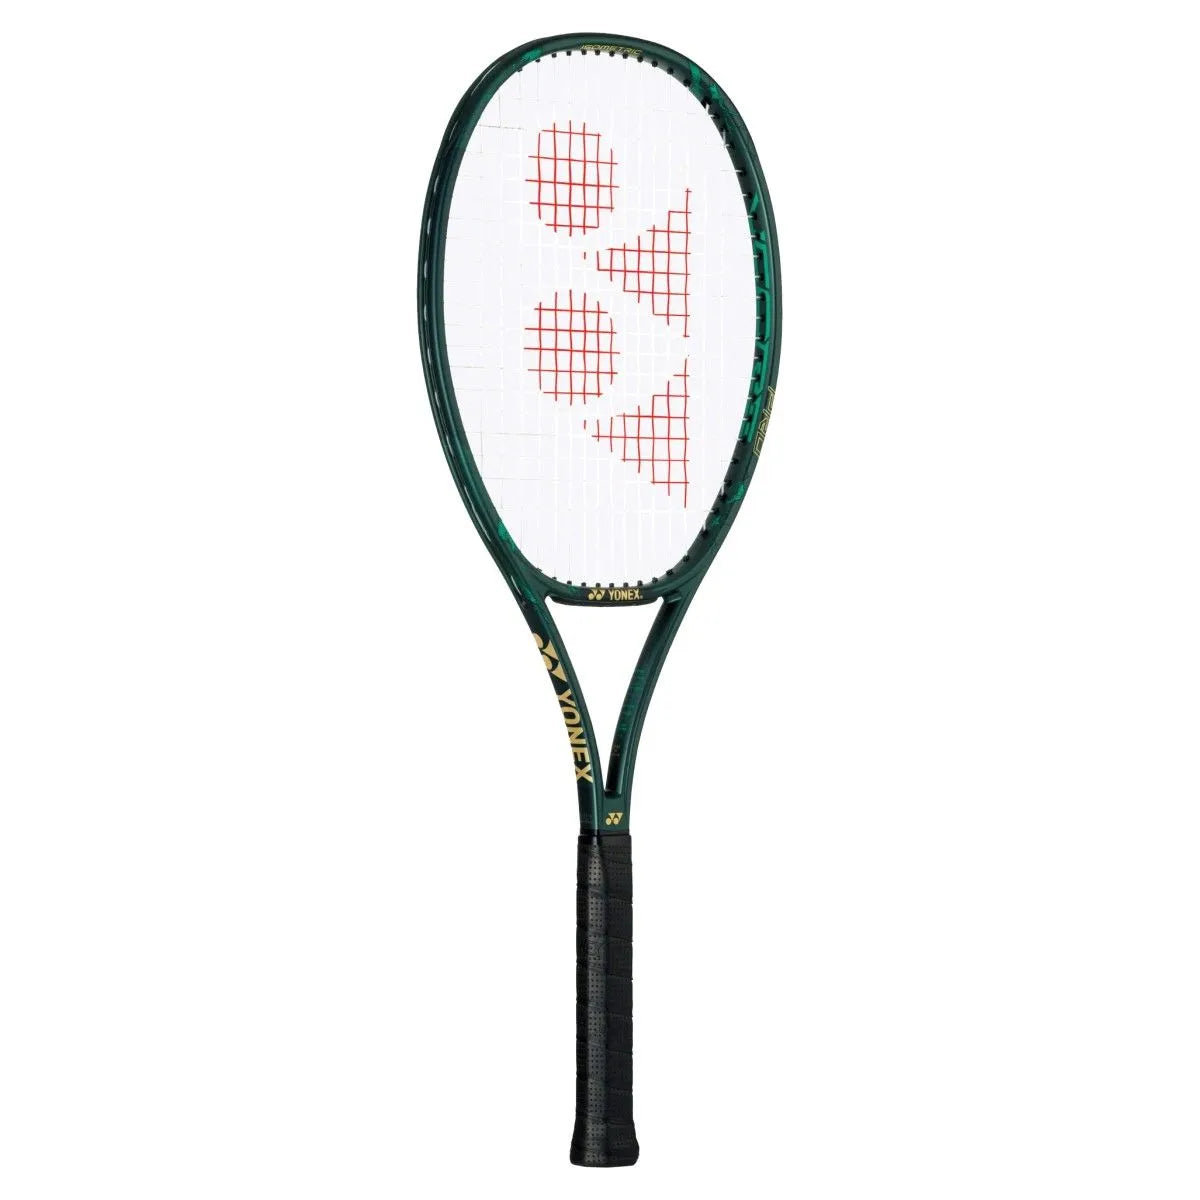 YONEX Tennis Racquet Vcore Pro 100LG (280g)